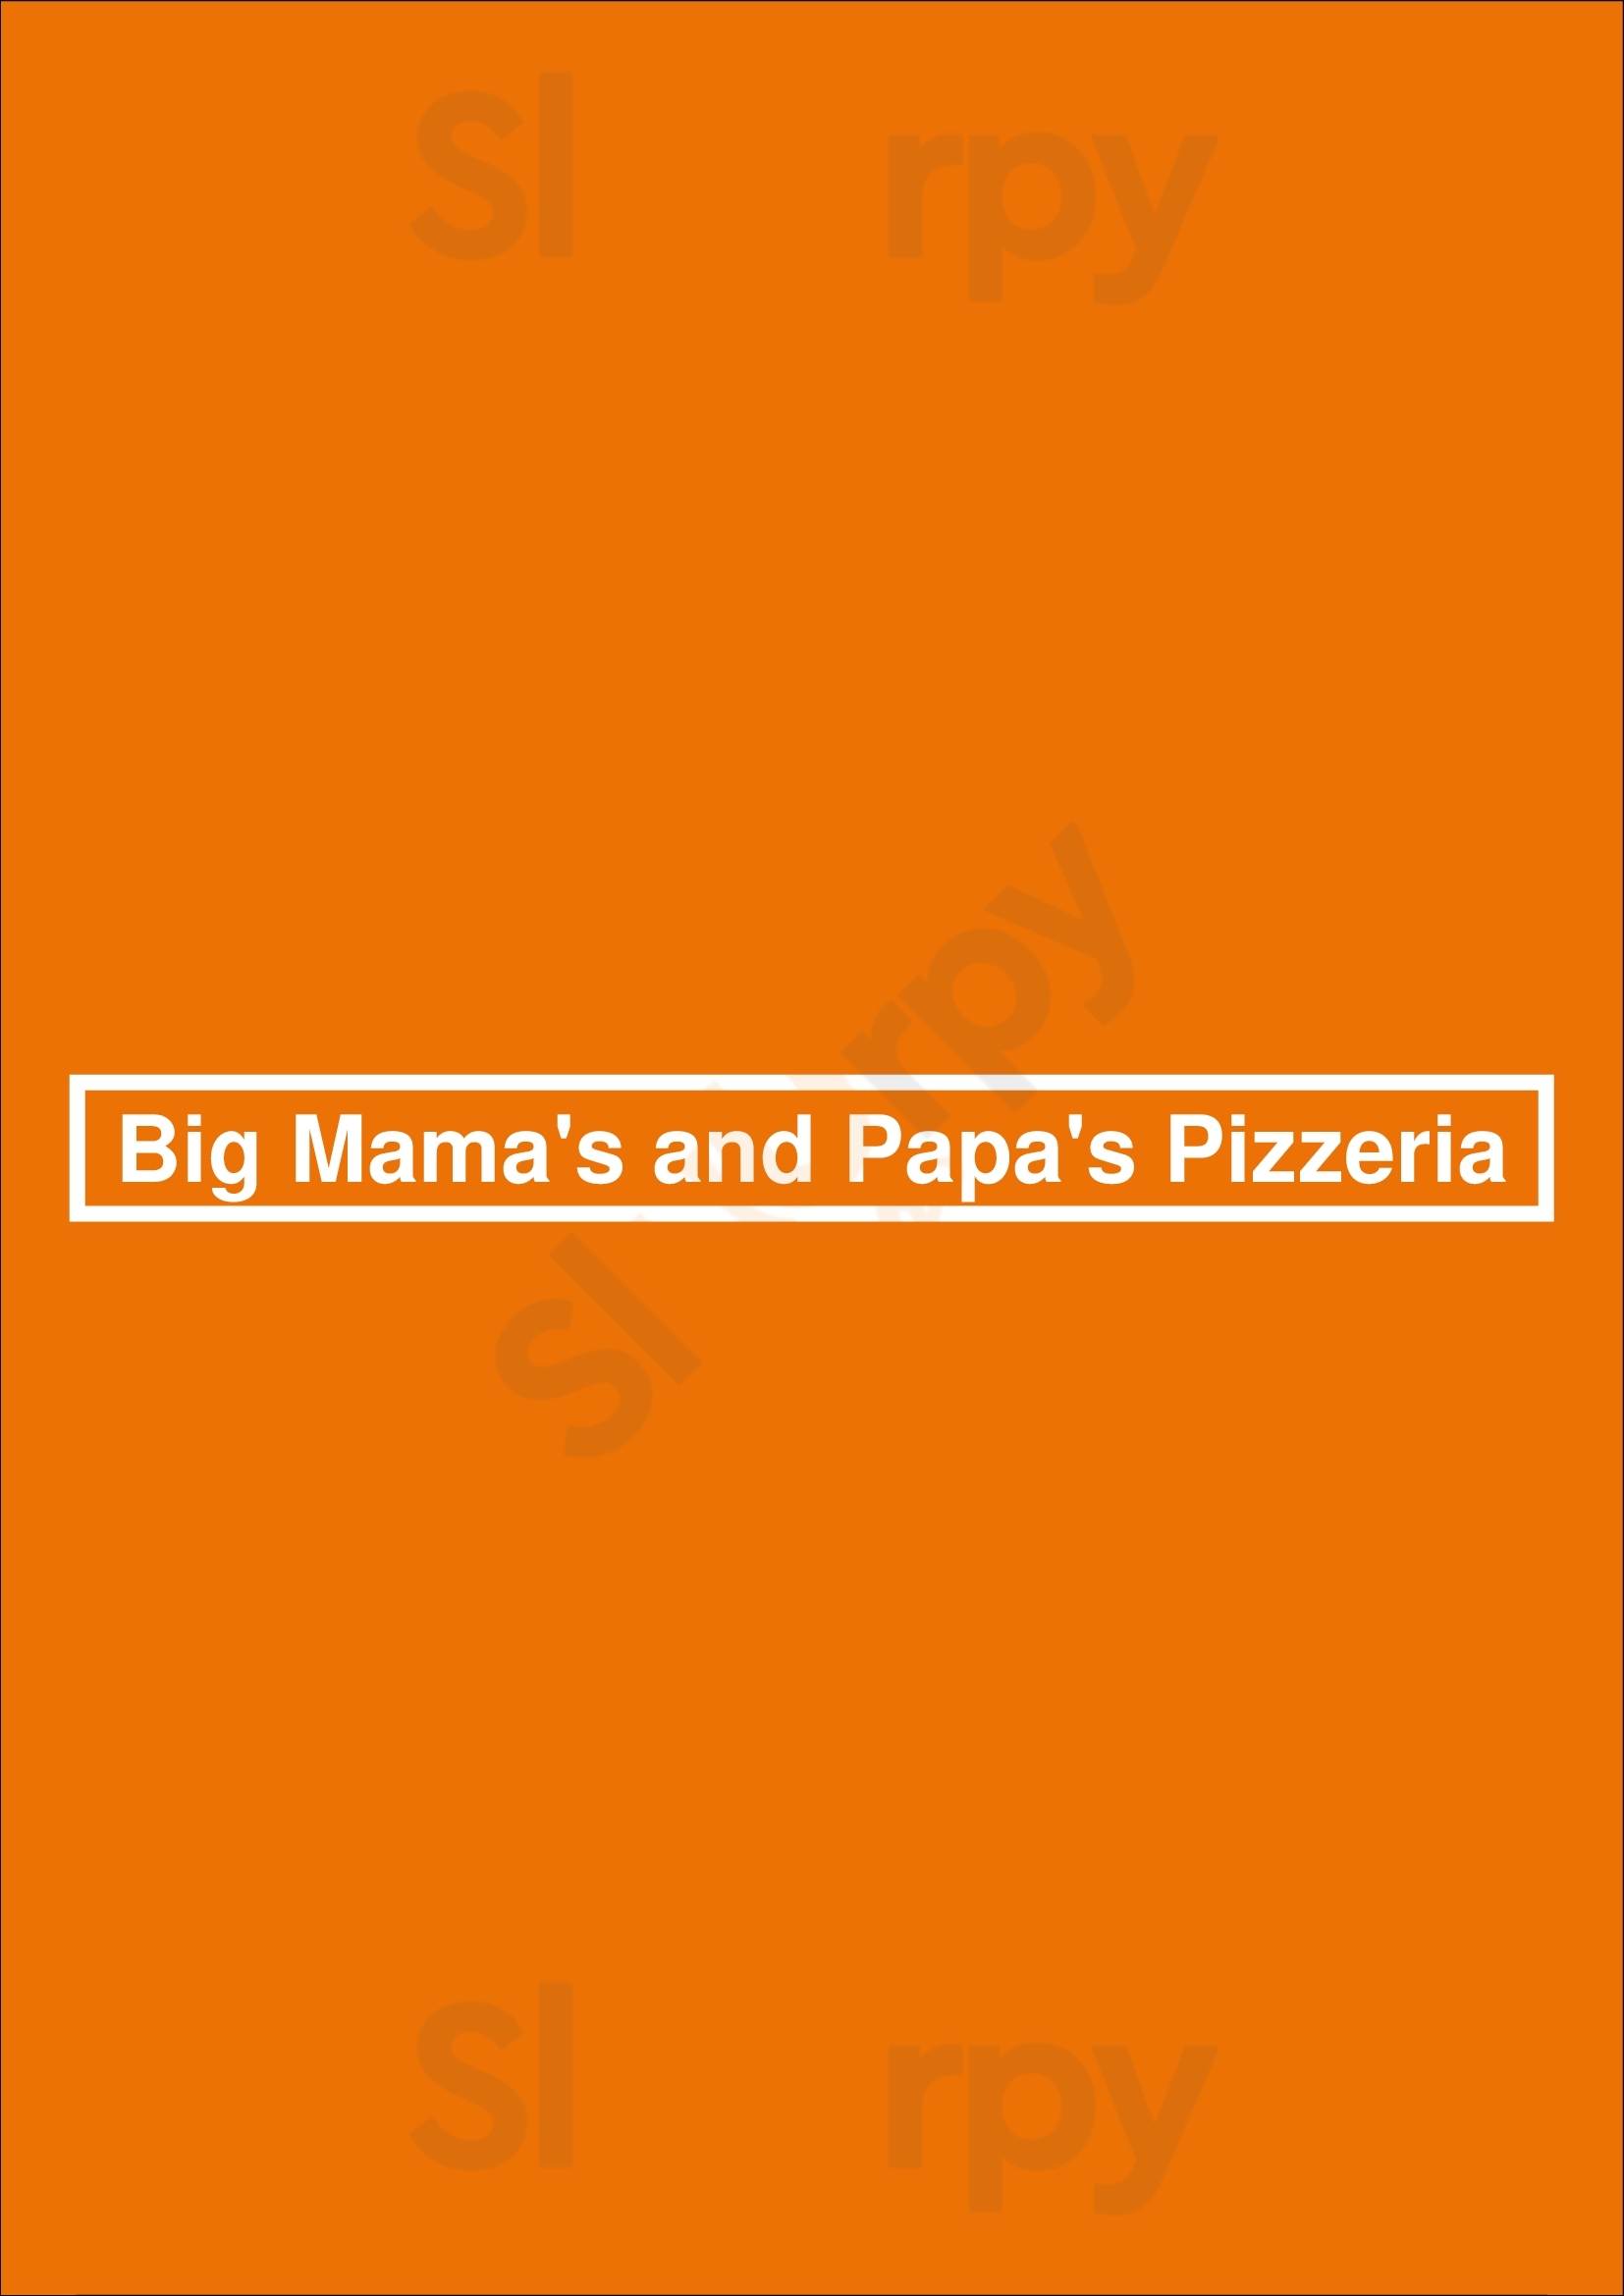 Big Mama's & Papa's Pizzeria - Northridge Los Angeles Menu - 1